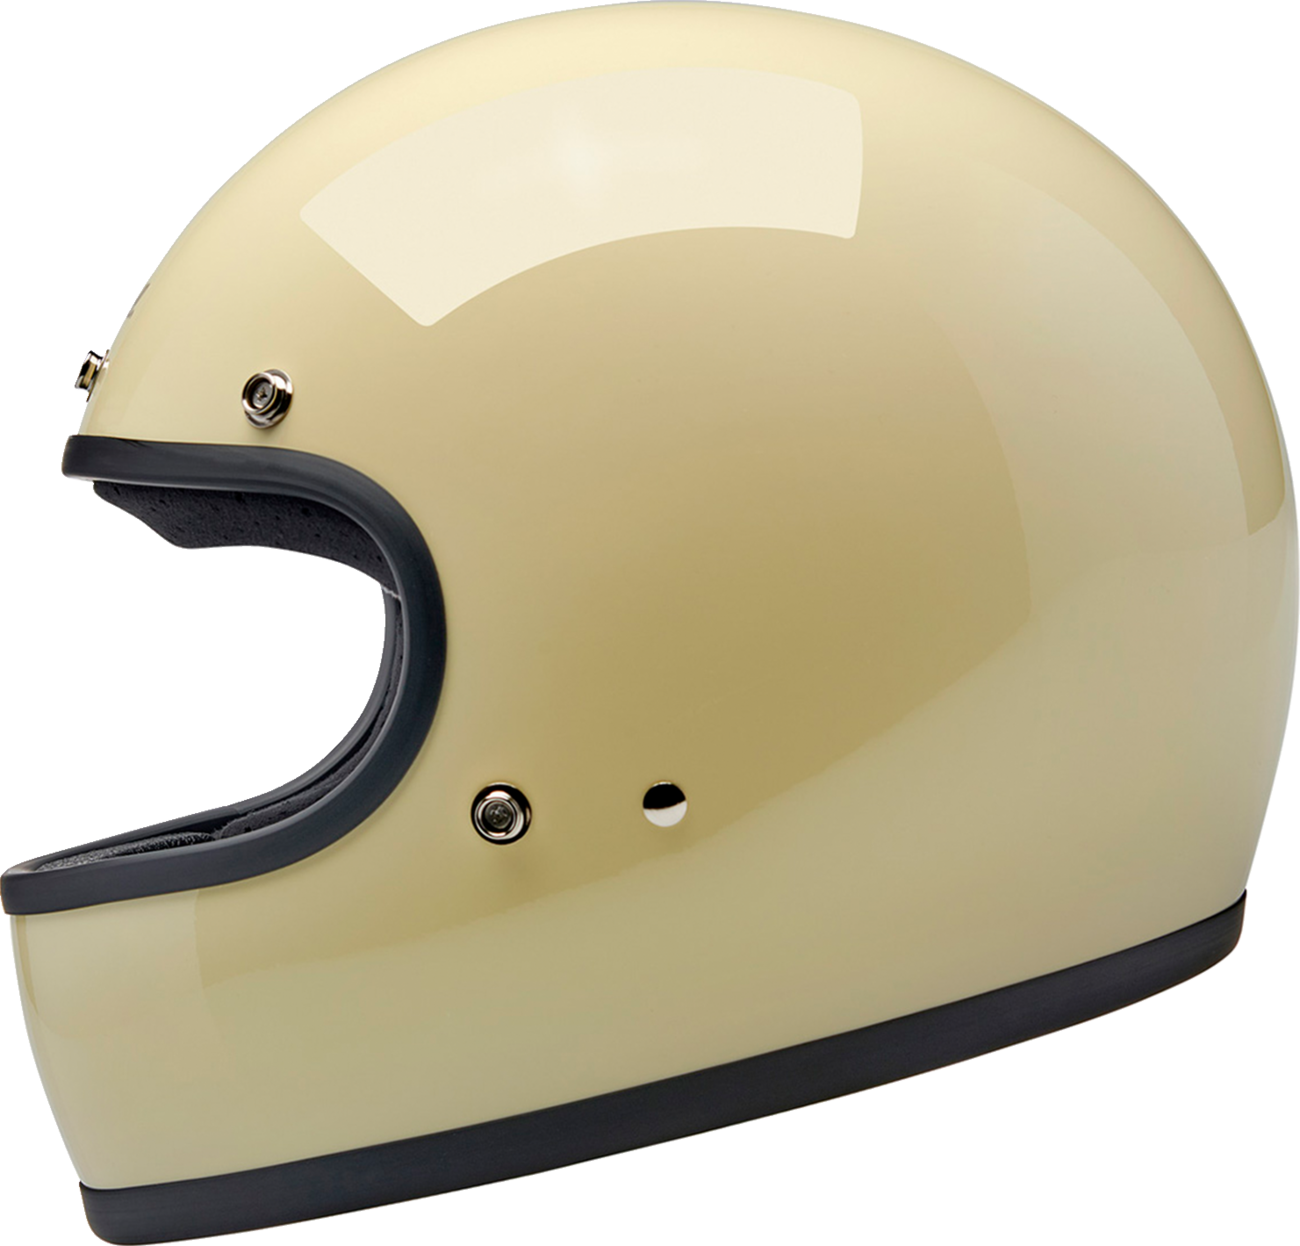 BILTWELL Gringo Helmet - Gloss White - Small 1002-102-502